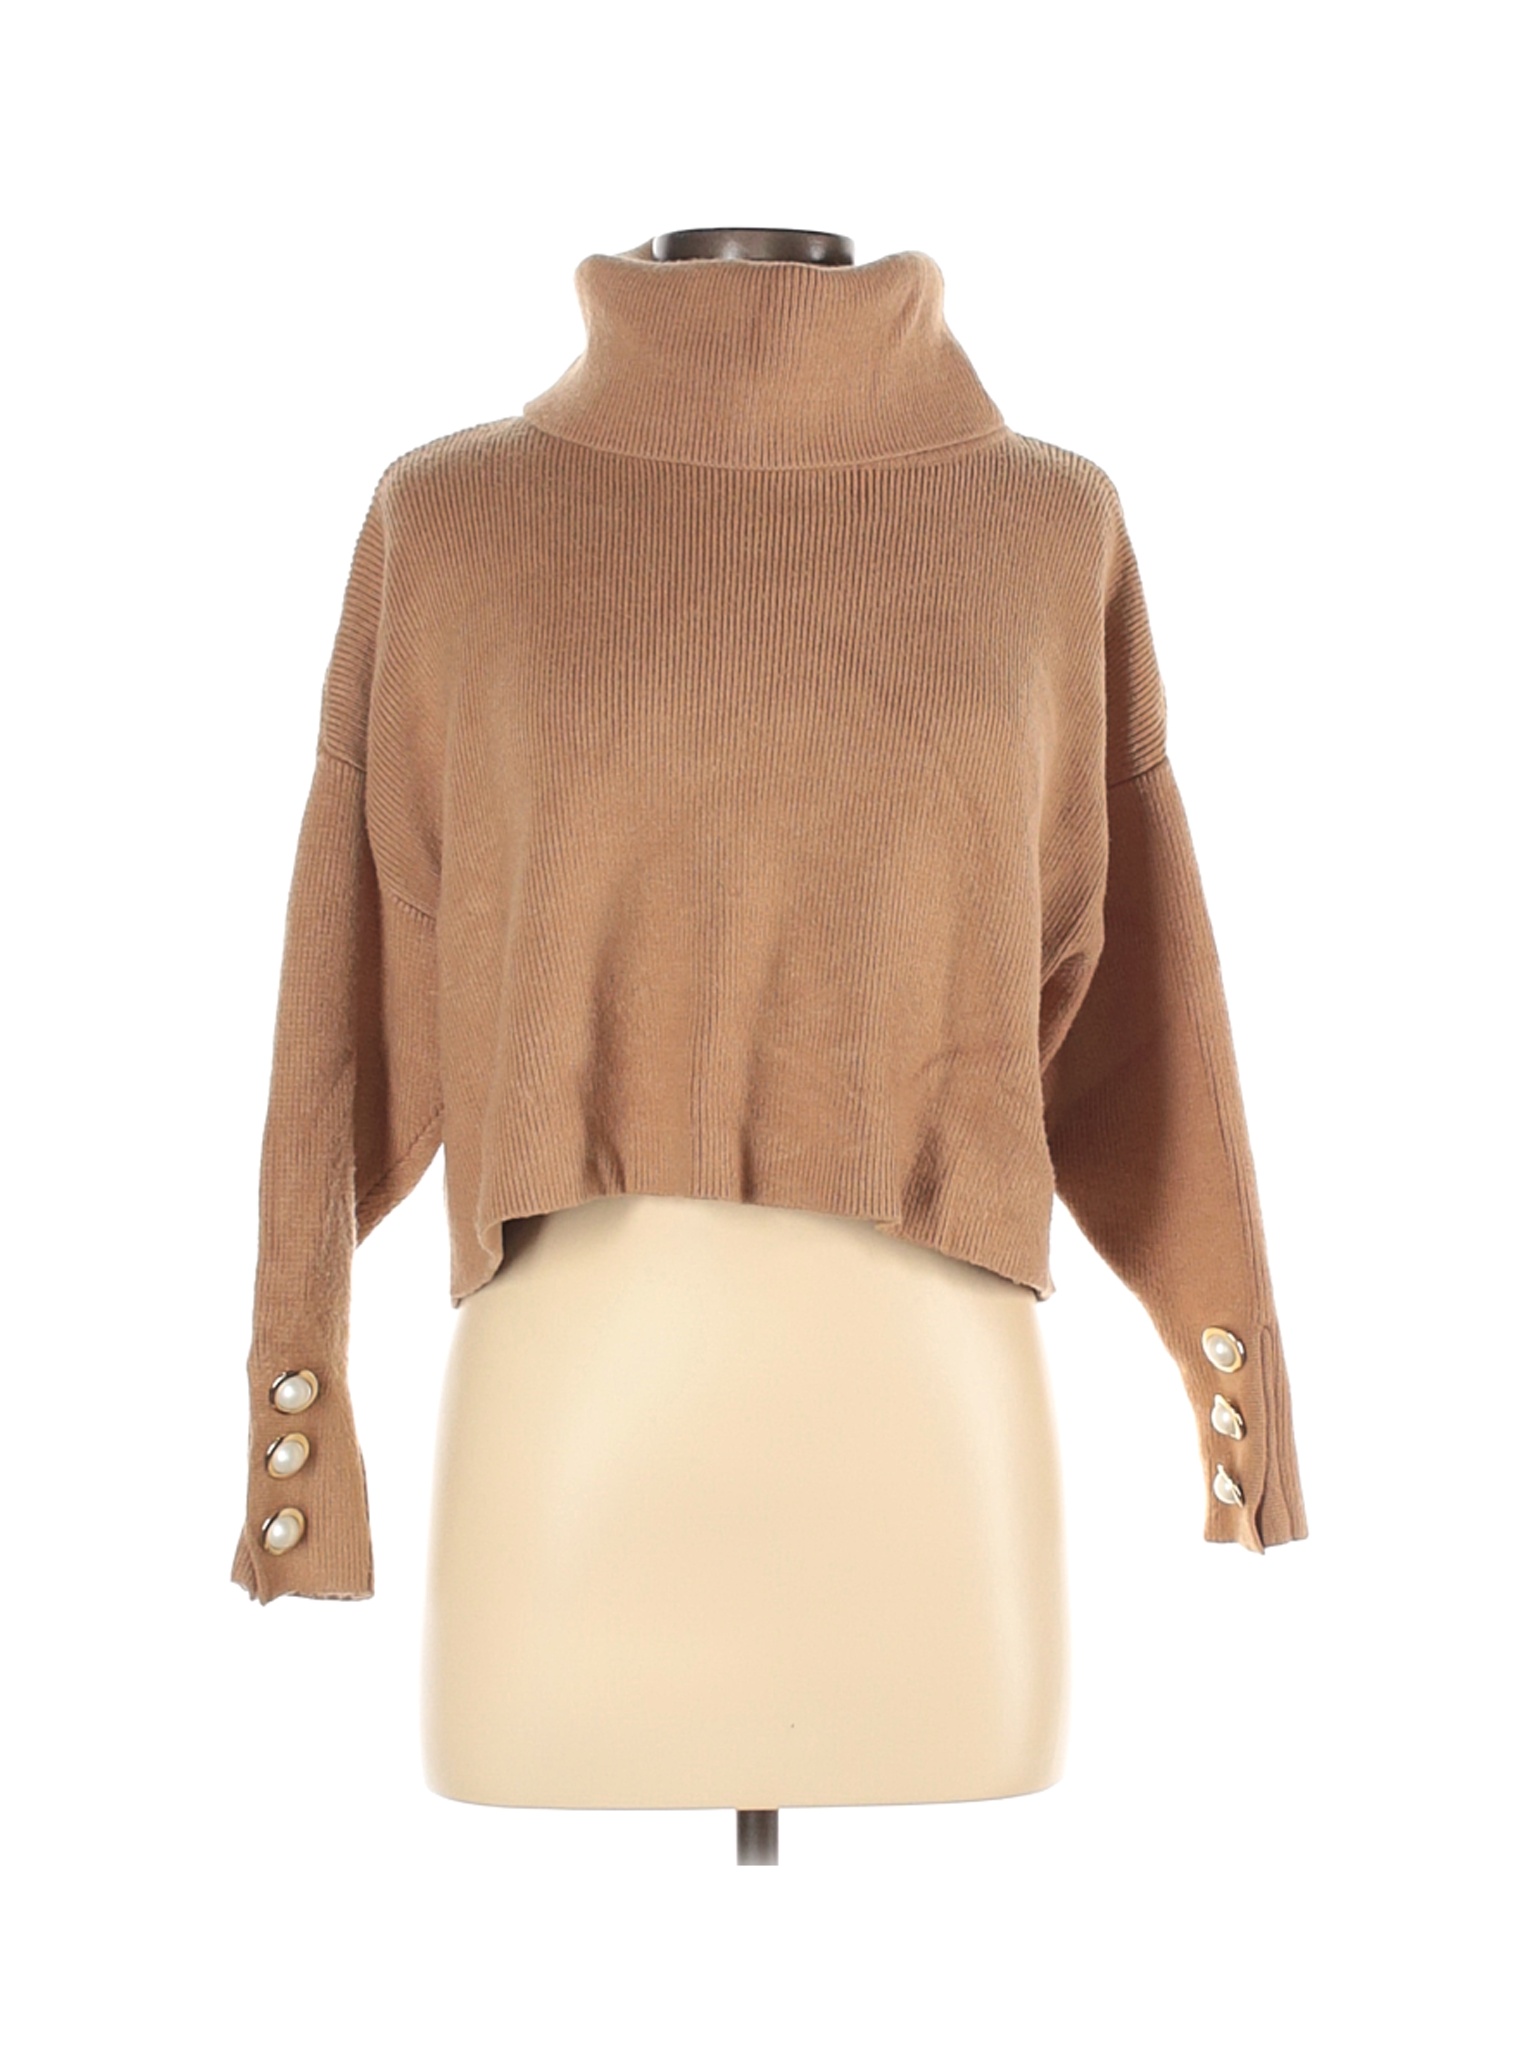 Zara Women Brown Turtleneck Sweater M | eBay